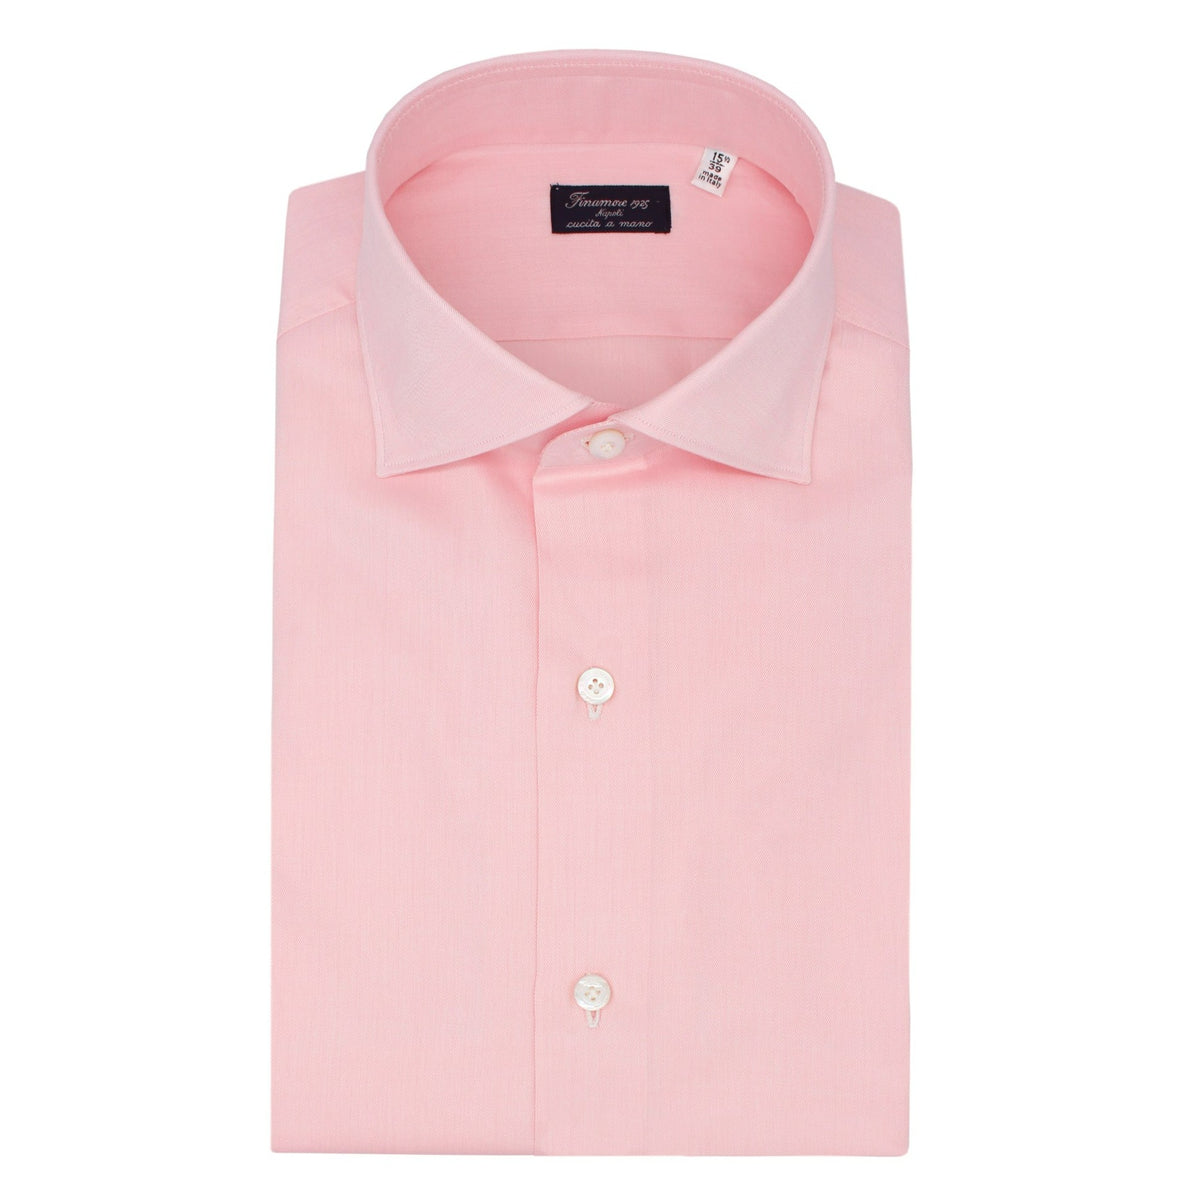 Classic Milano slim fit pink cotton twill shirt